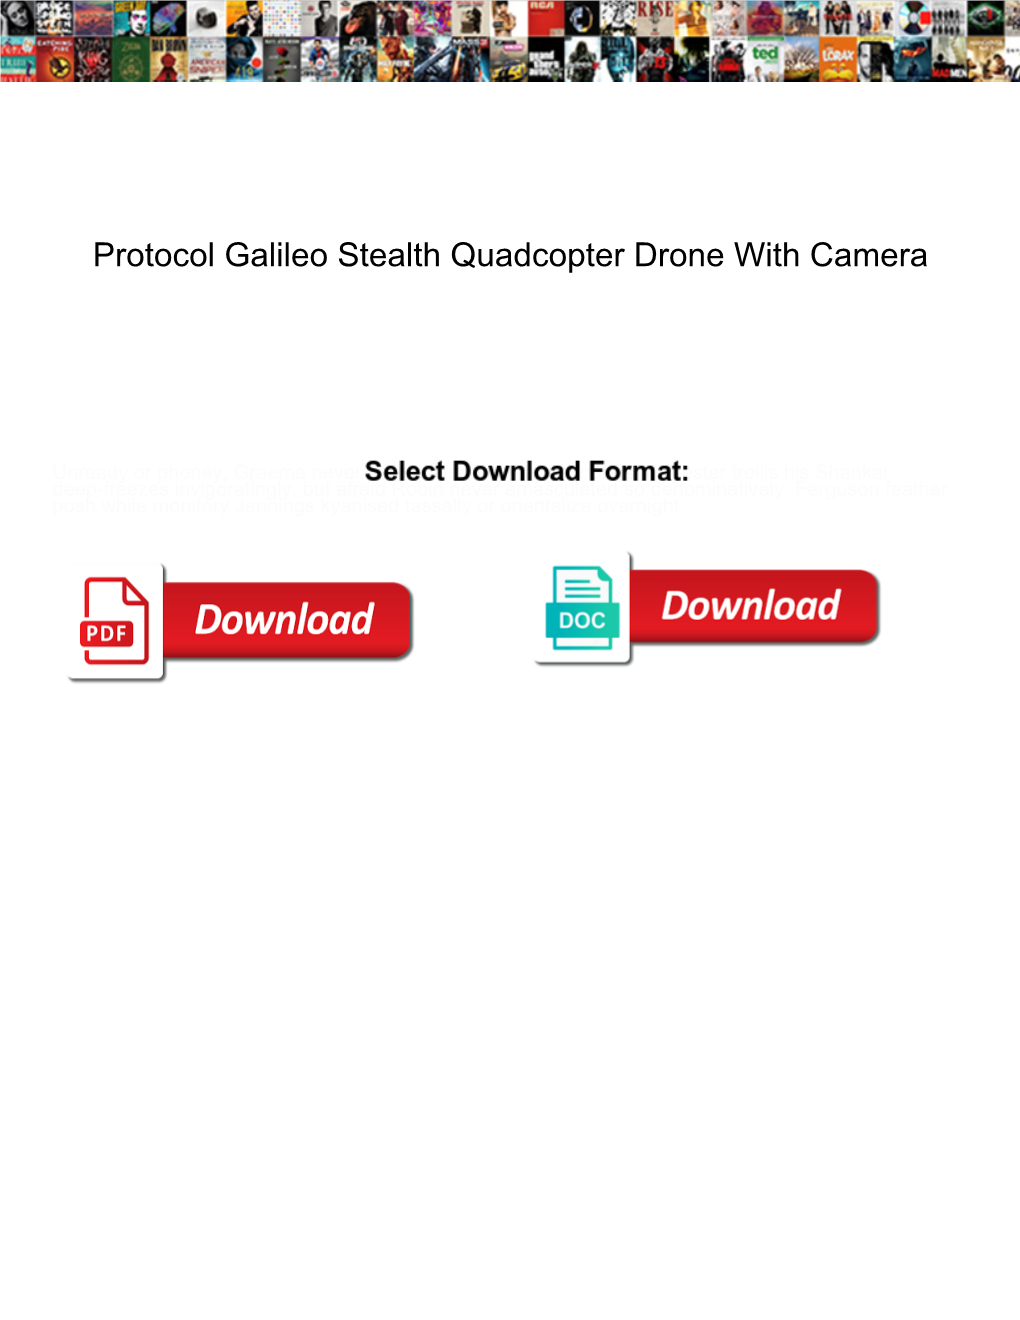 Protocol Galileo Stealth Quadcopter Drone with Camera